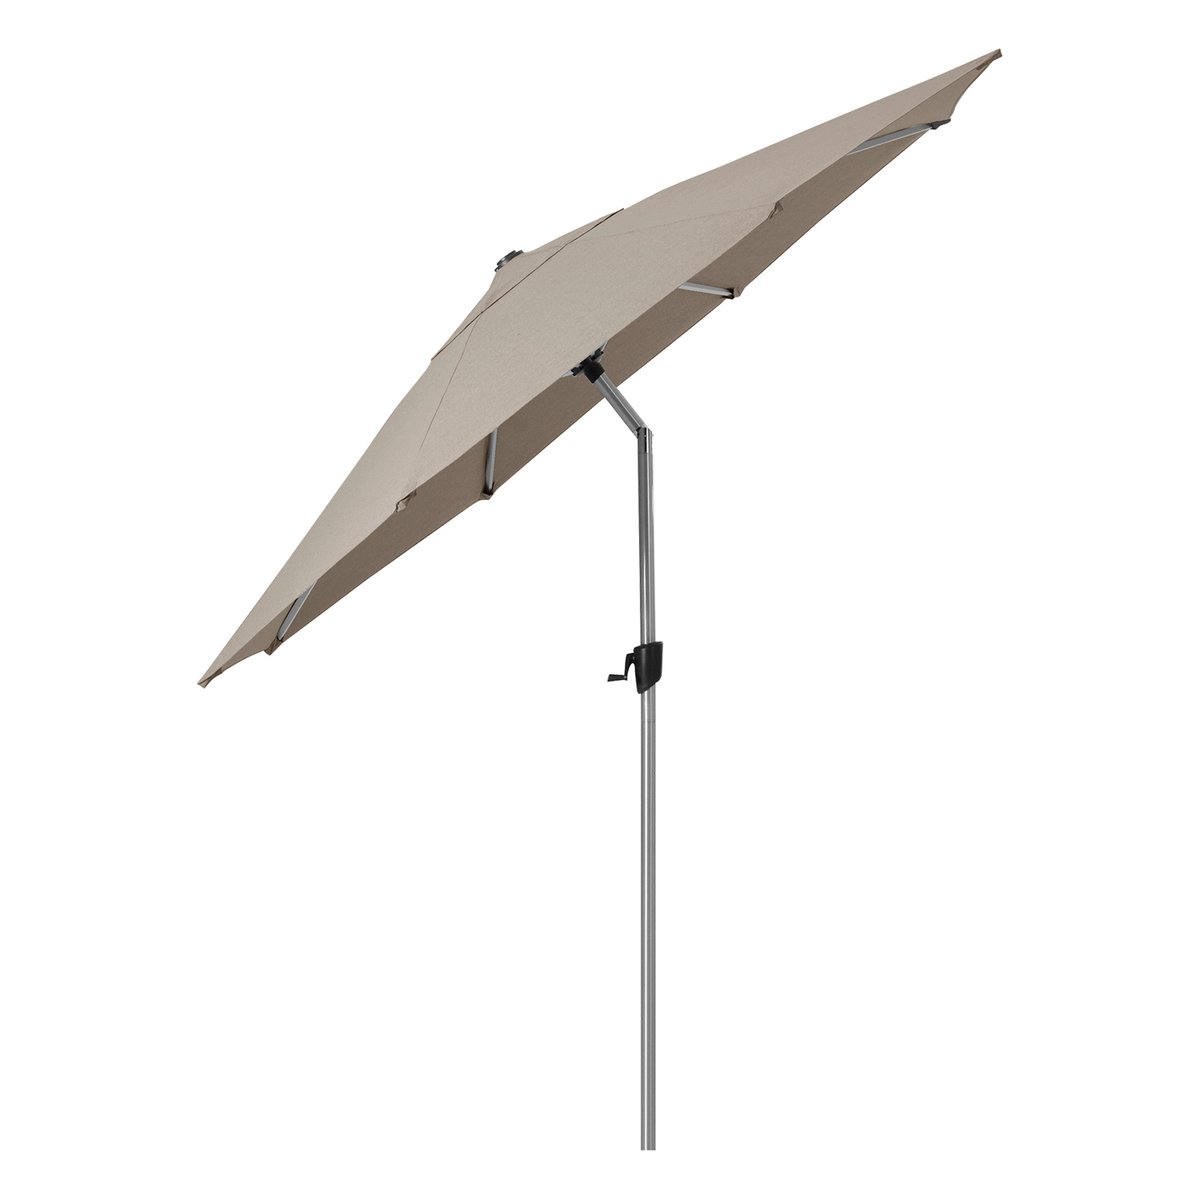 bagage Koning Lear goochelaar Cane-line Sunshade parasol, with tilt, taupe - silver | Finnish Design Shop